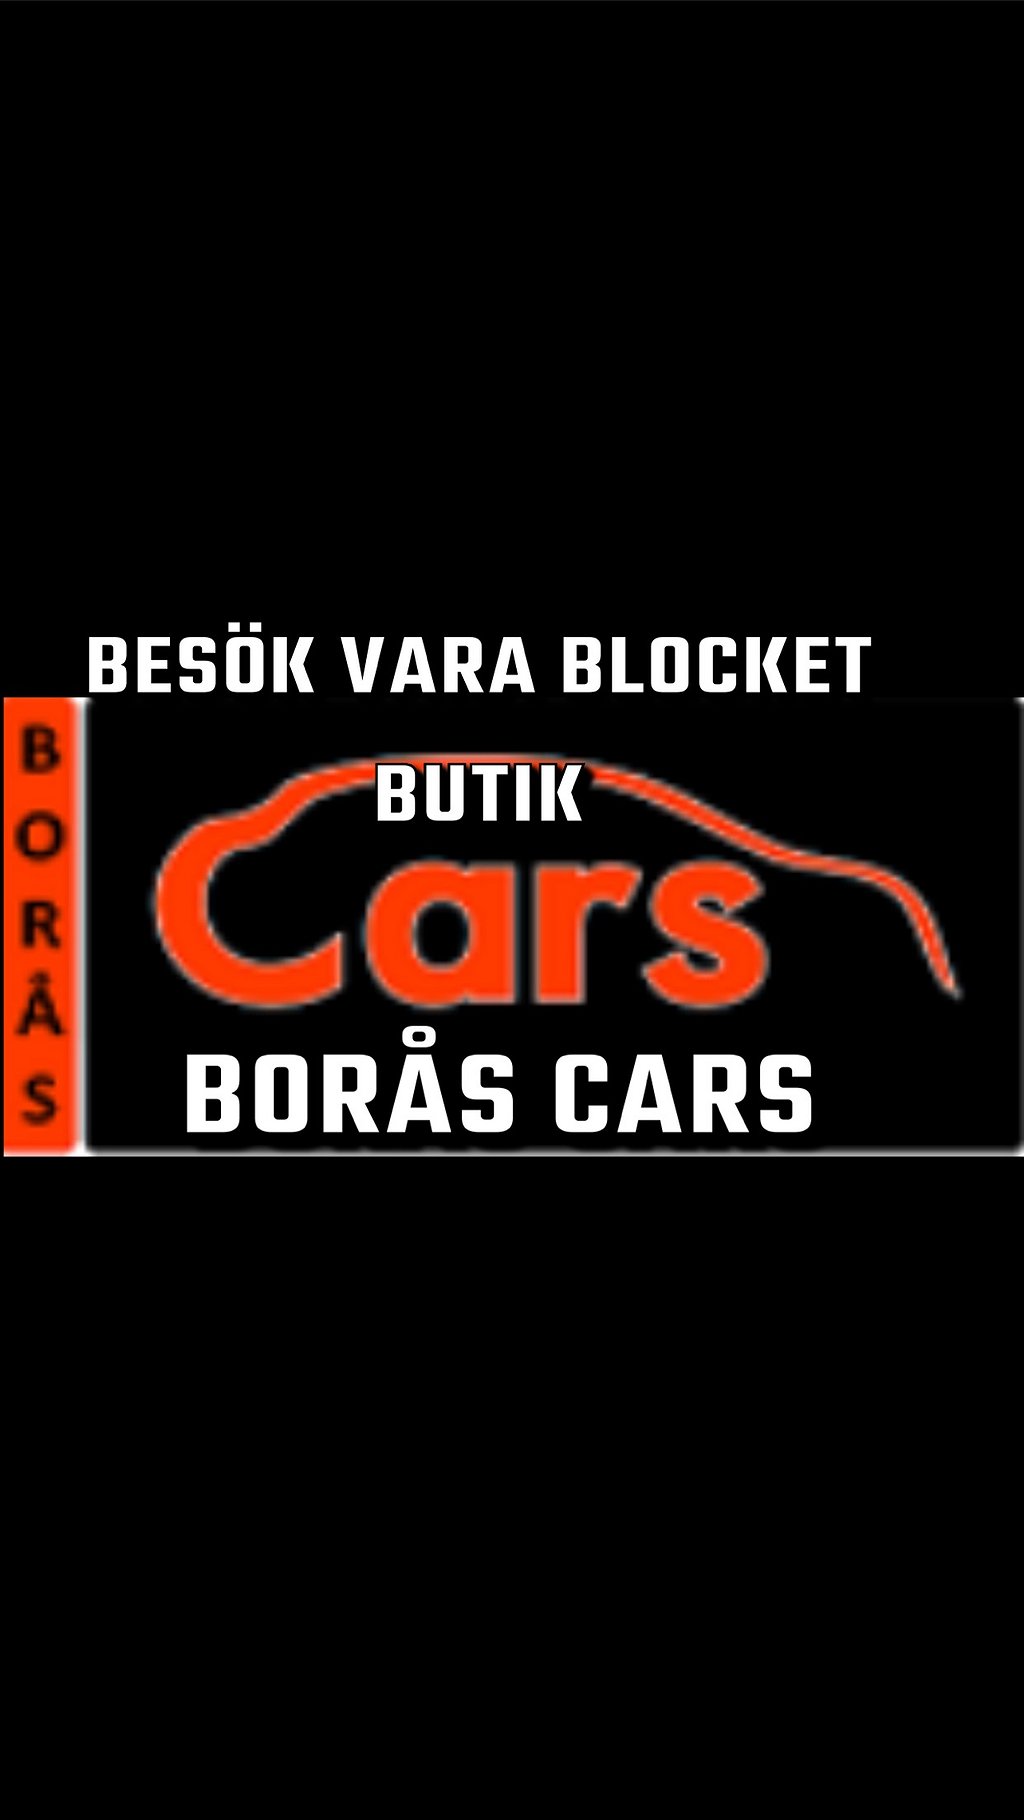 Audi A5 Besök vara blocket Butik Borås cars